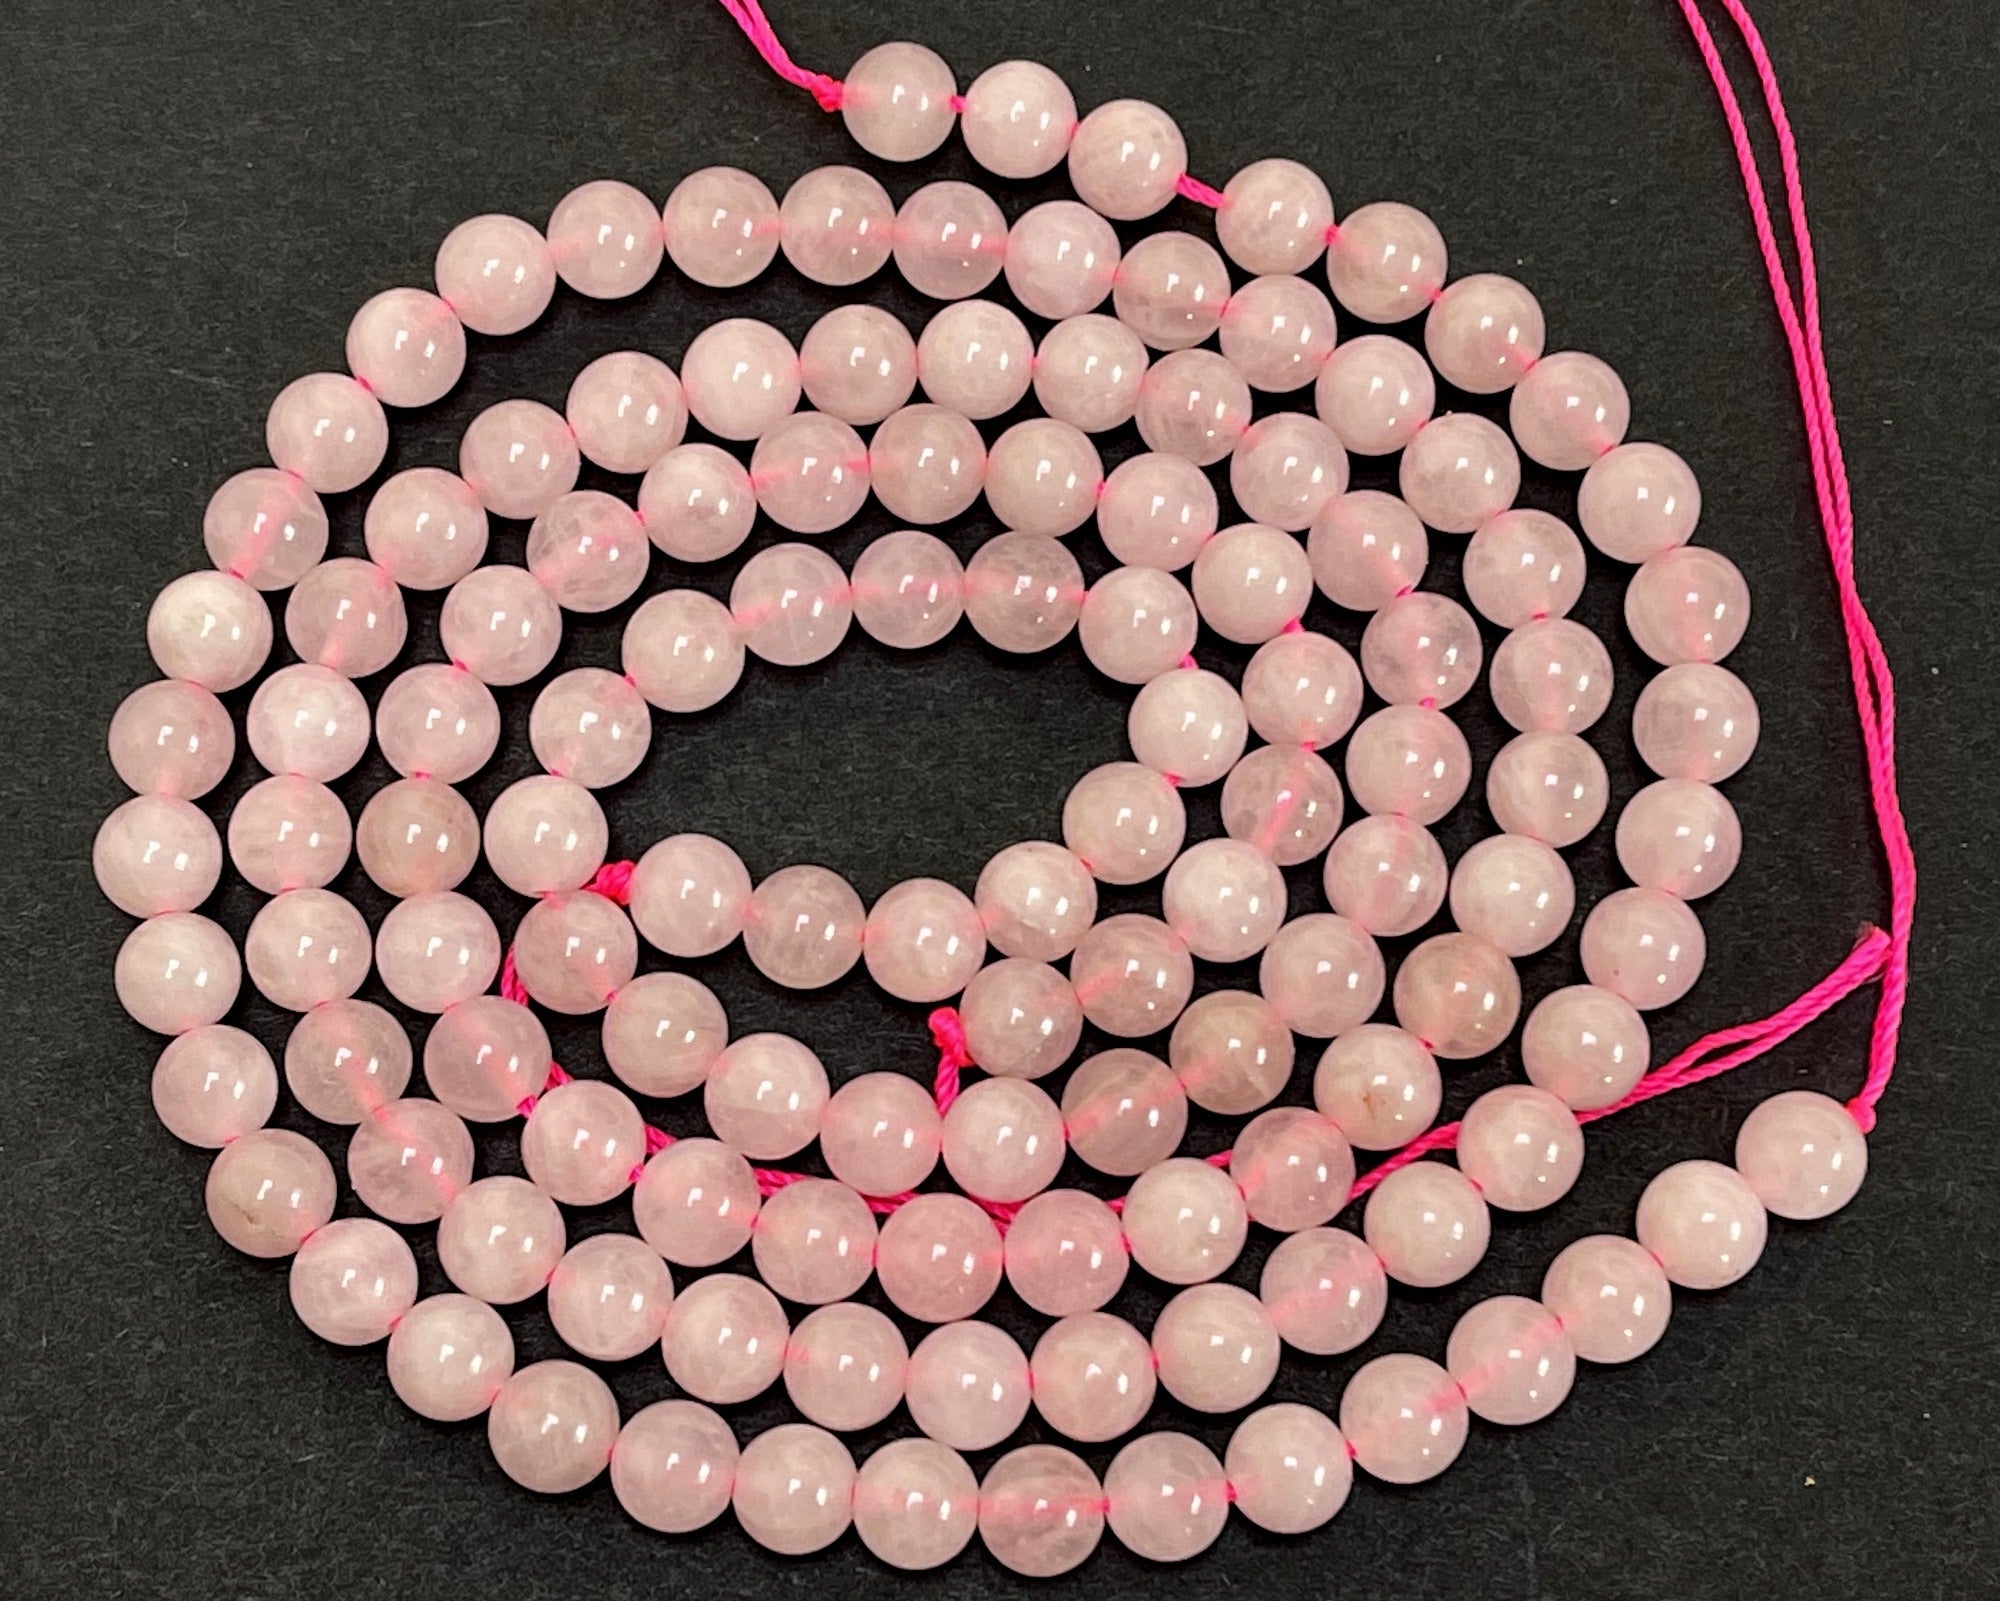 Rose Quartz 6mm round natural gemstone beads 15" strand - Oz Beads 